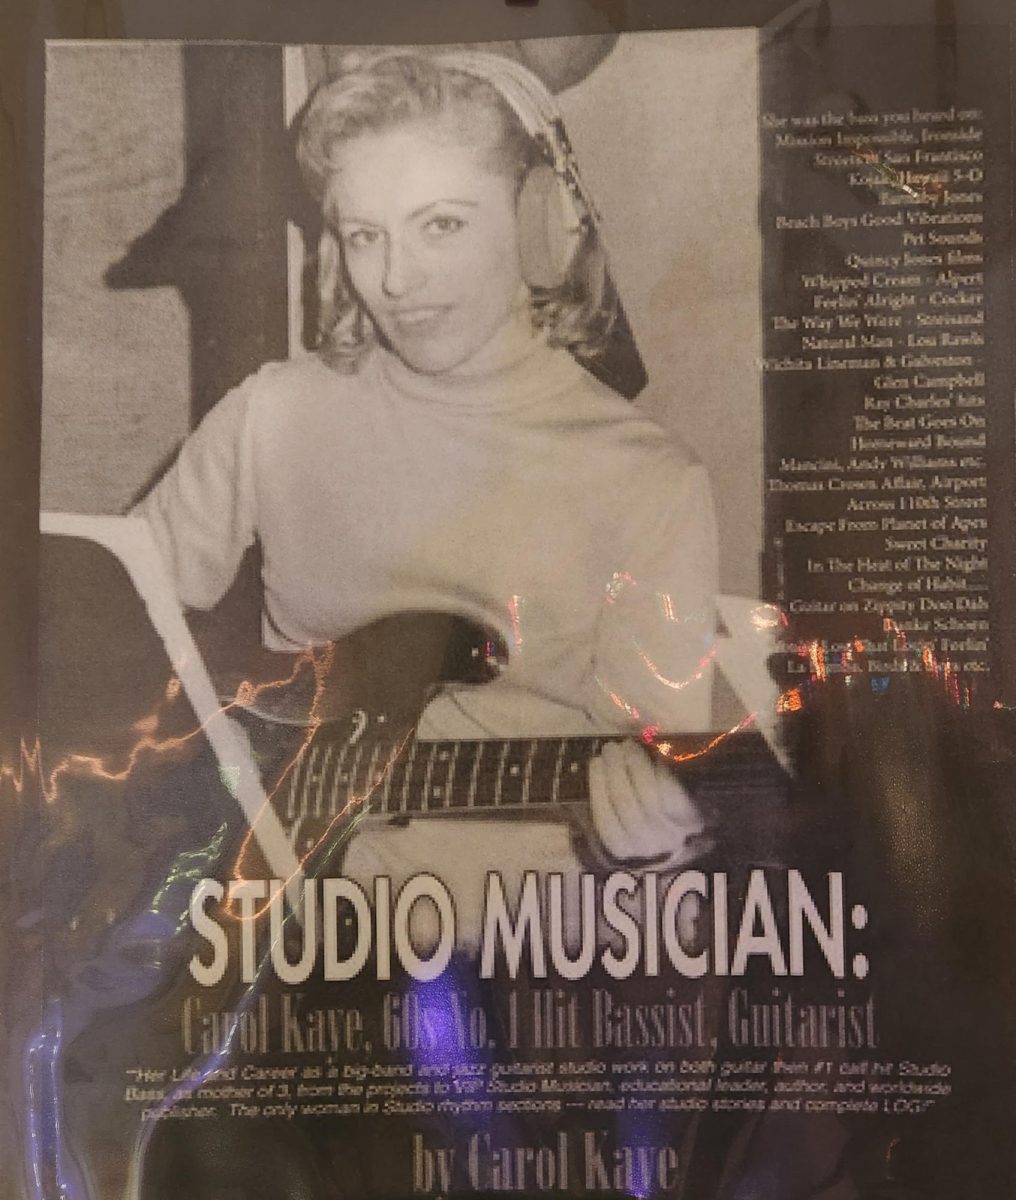 Bassist Carol Kaye recording in a studio